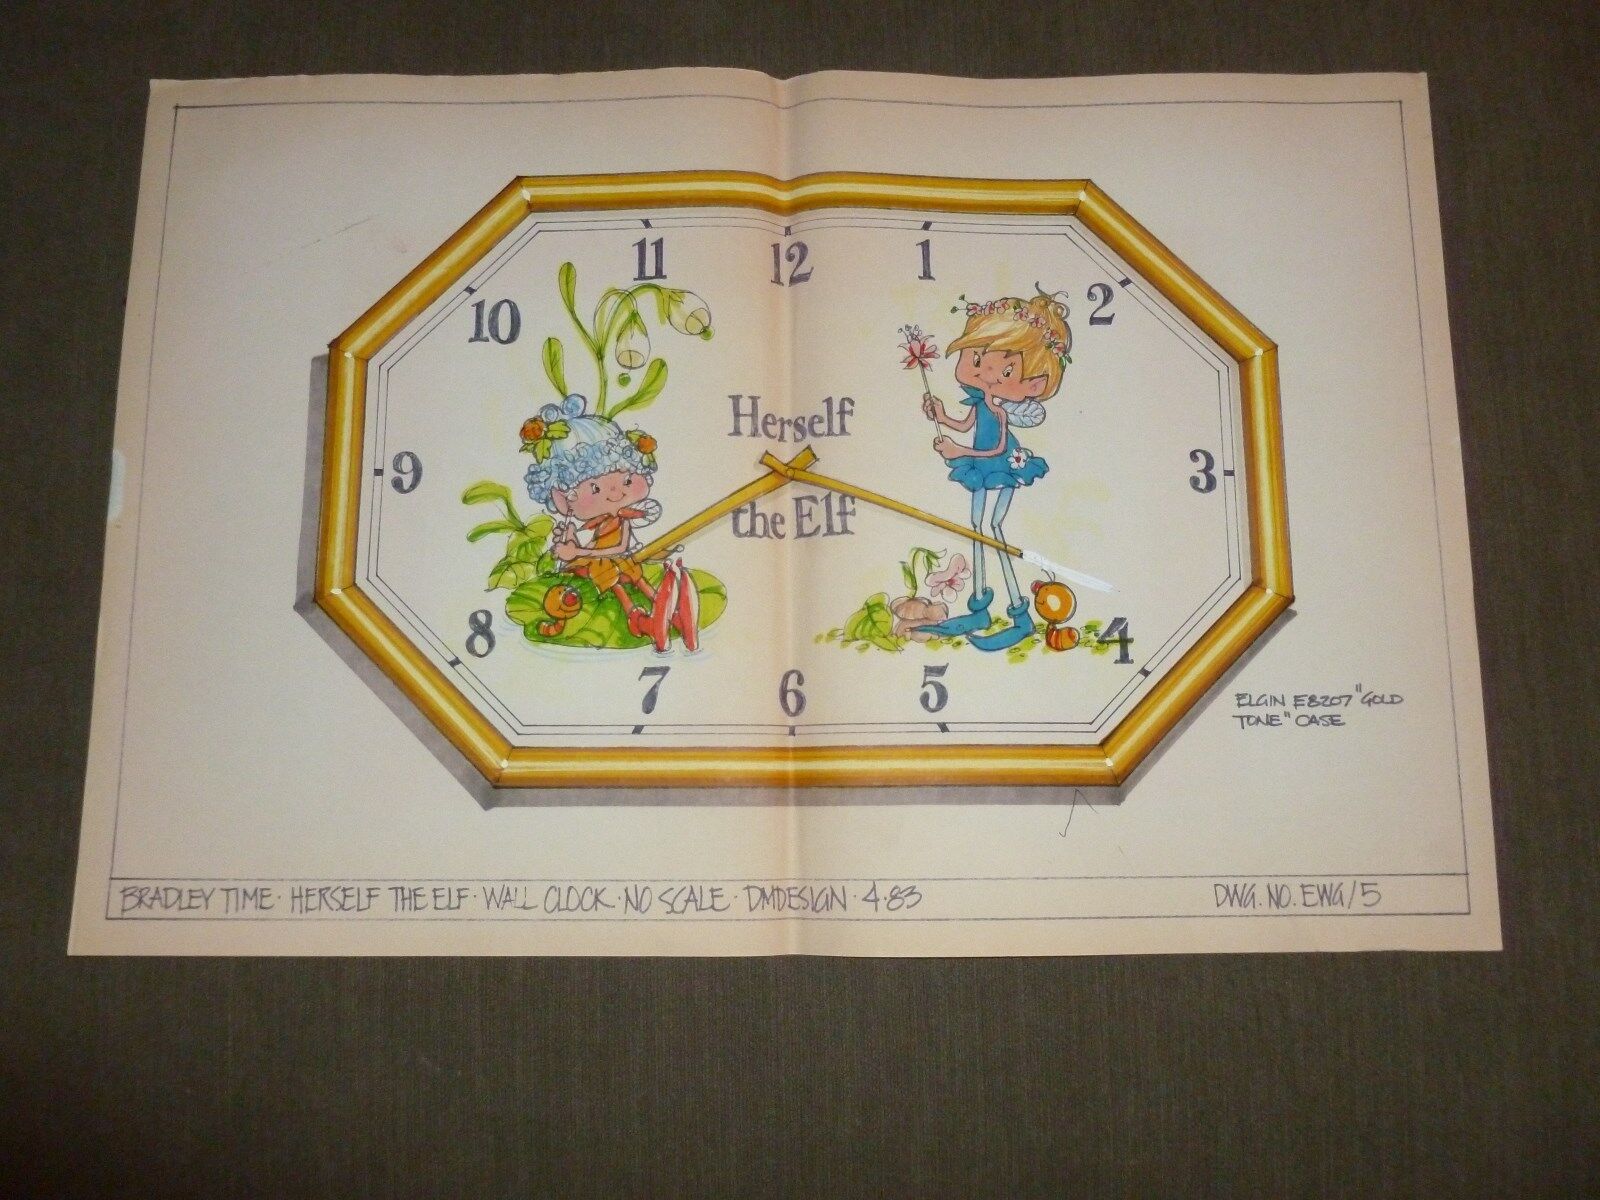 Herself the Elf --Original Art Work-Bradley Time Wall Clock Concept Design 1983